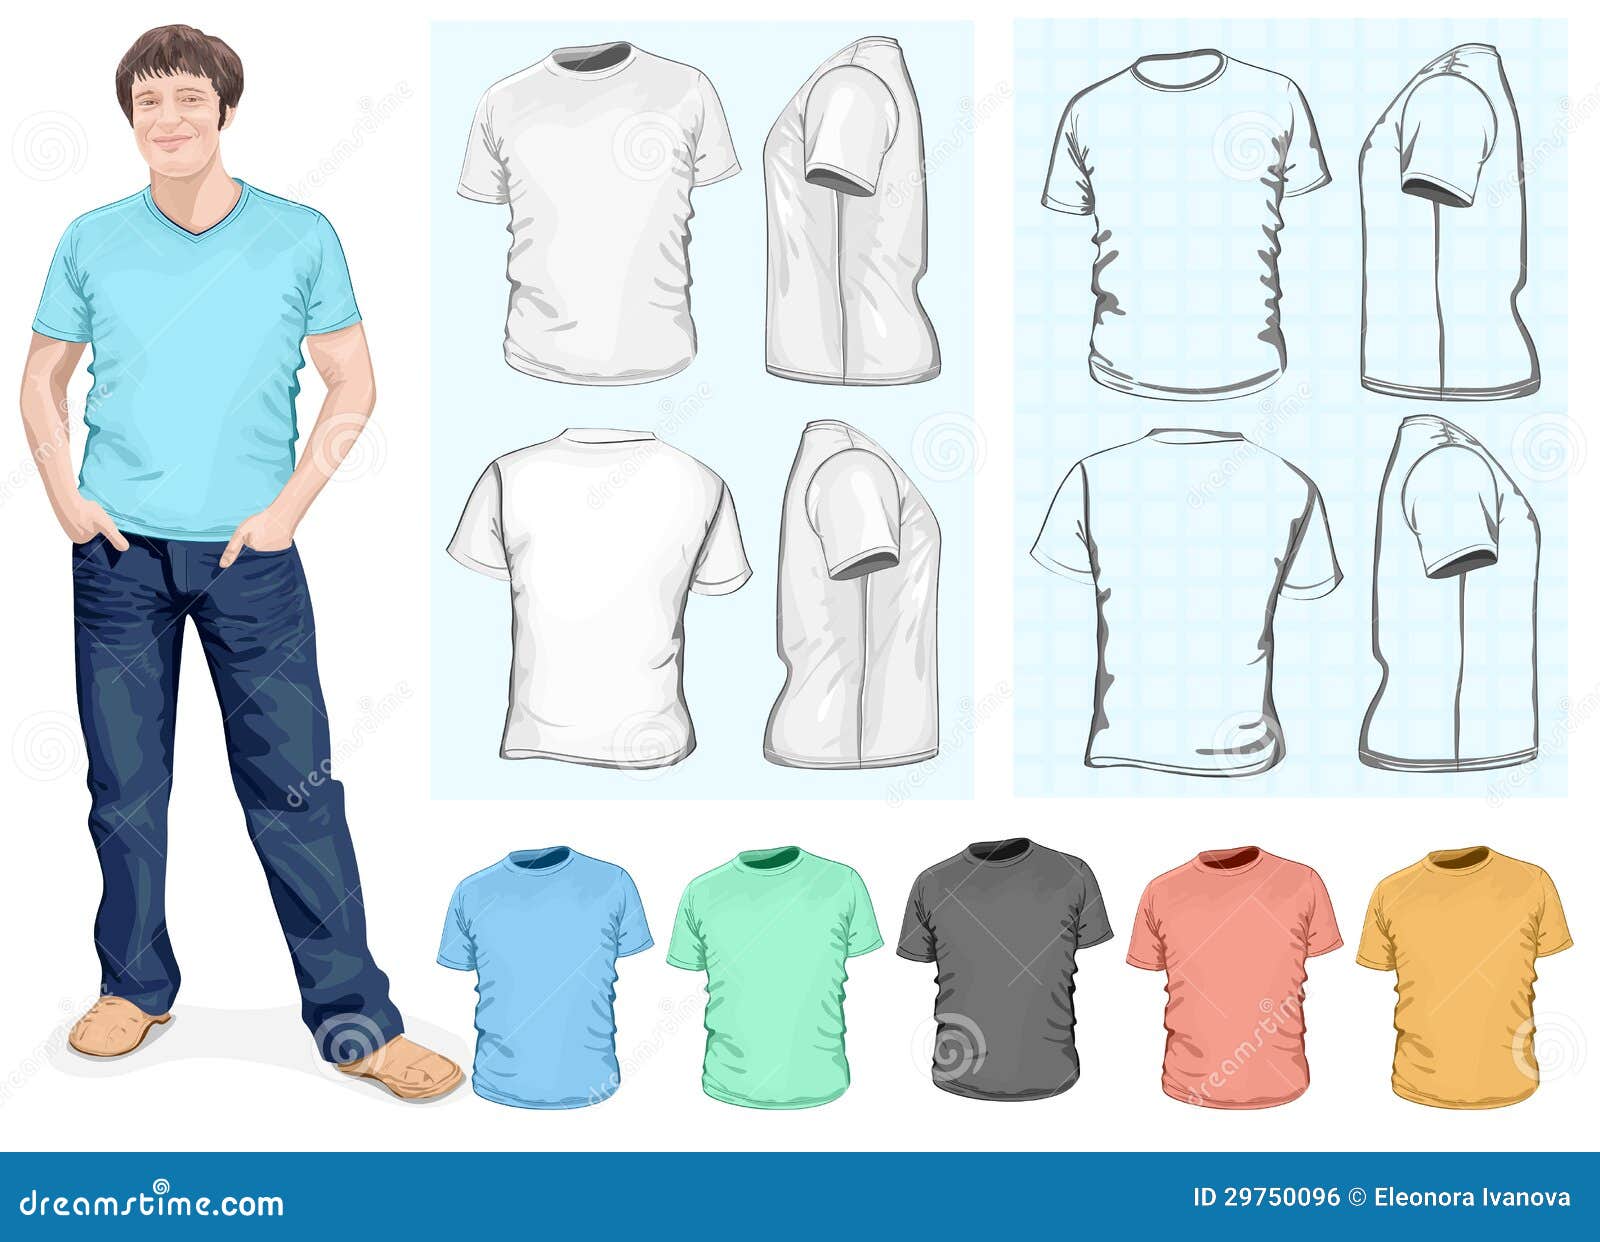 Men's T-shirt Design Template Royalty Free Stock Image ...